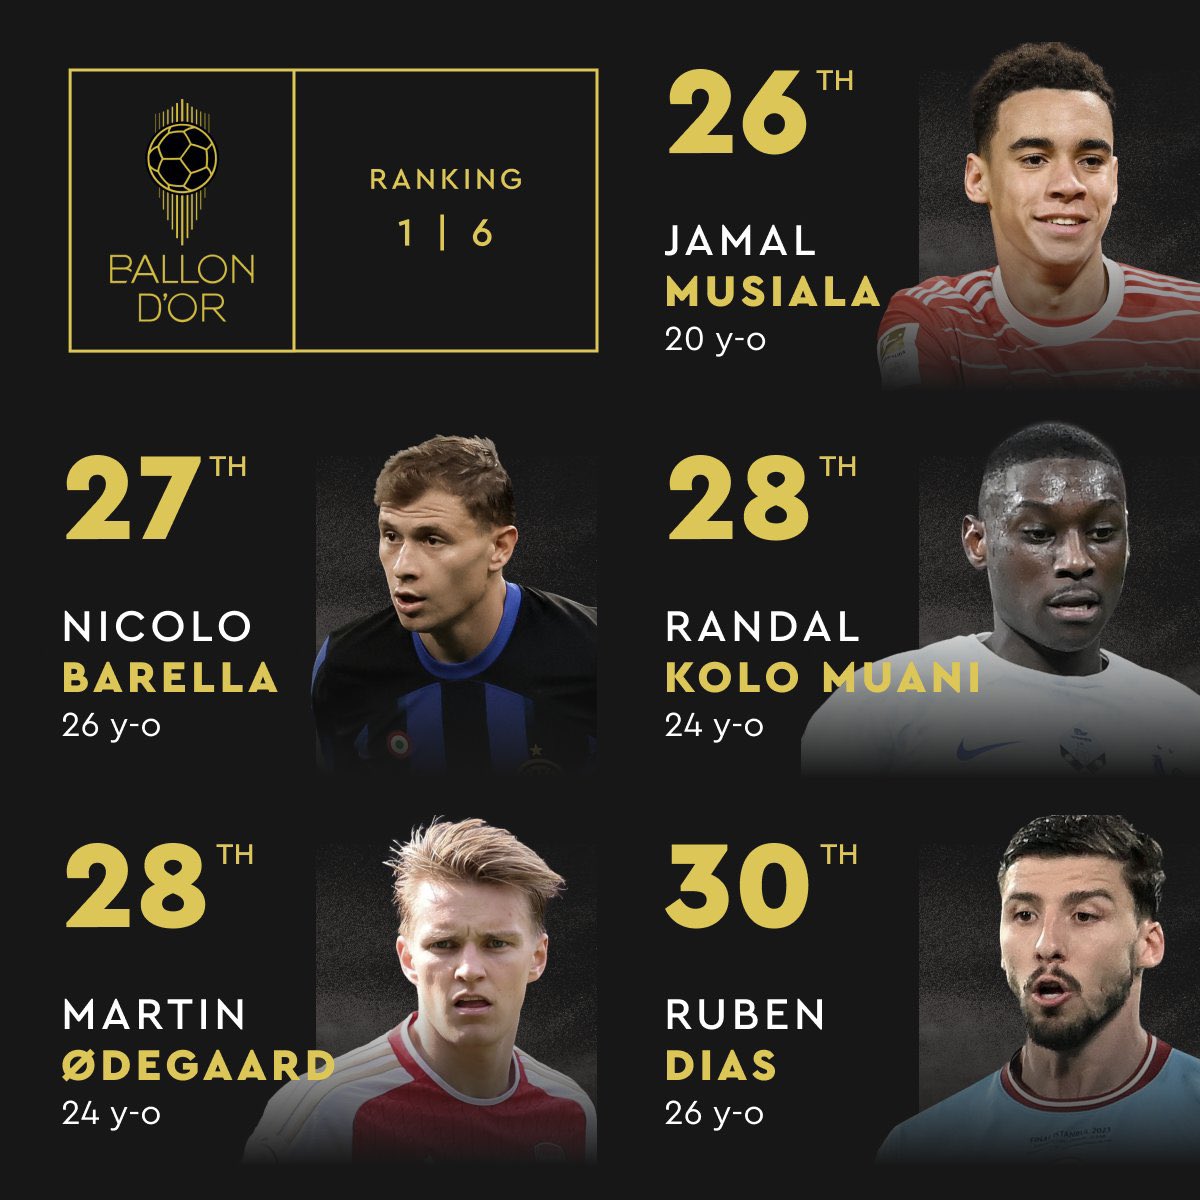 🚨✨ Ballon d’Or official ranking.

3️⃣0️⃣ Rubén Dias
2️⃣8️⃣ Randal Kolo-Muani
2️⃣8️⃣ Martin Ødegaard
2️⃣7️⃣ Nicoló Barella
2️⃣6️⃣ Jamal Musiala